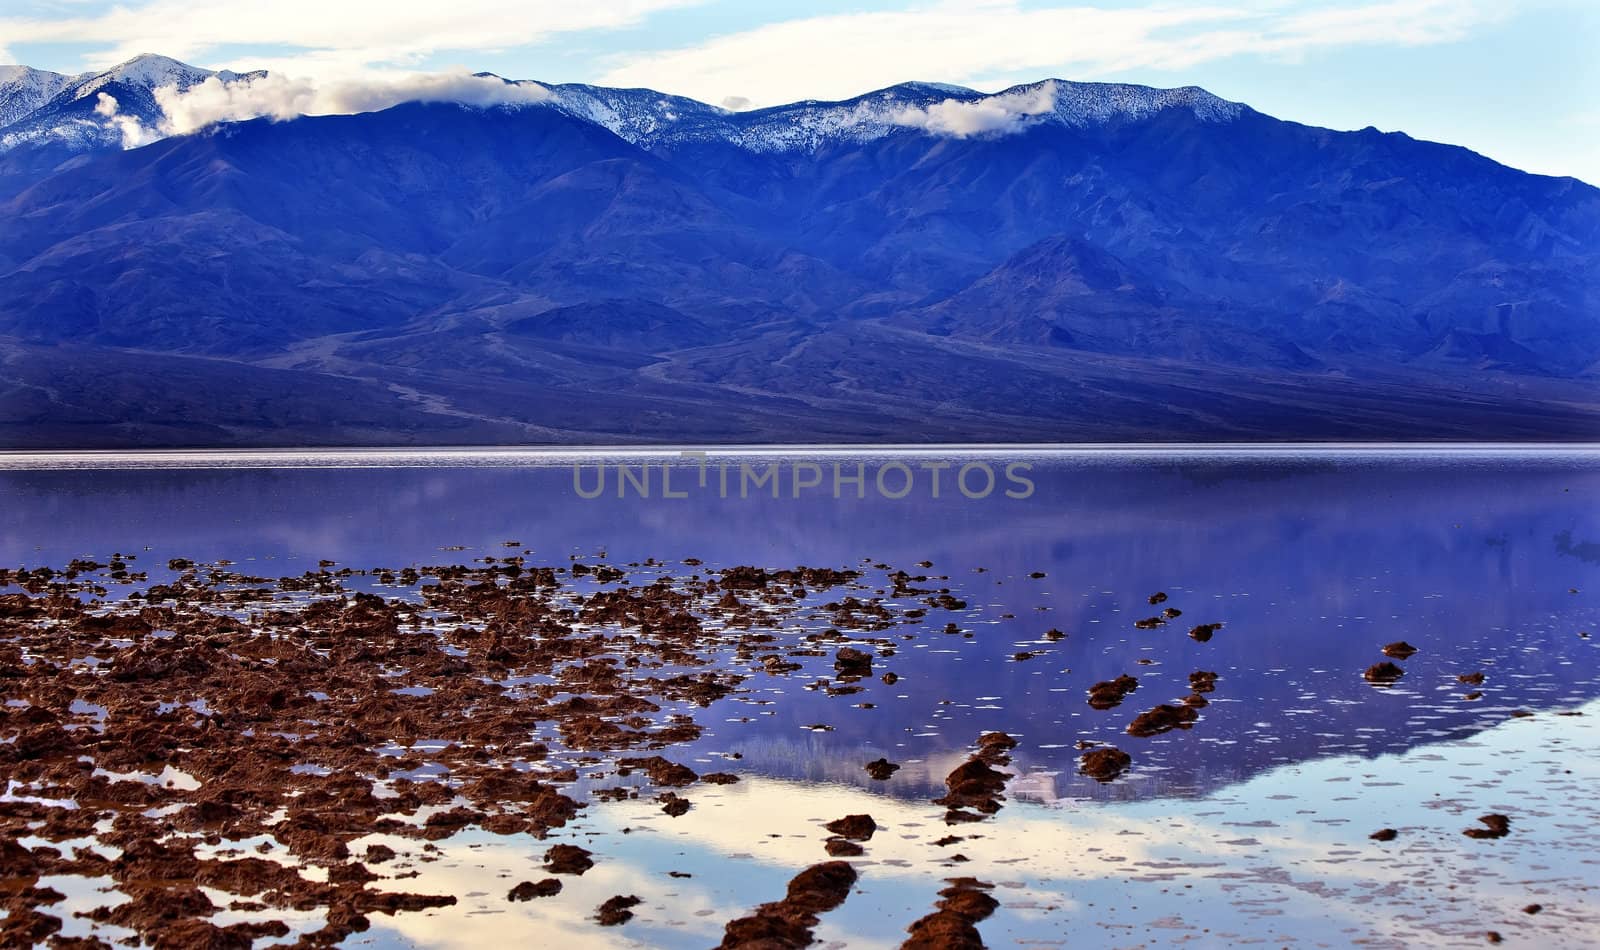 Salt Badwater Basin Death Valley National Park California Lowest spot in the Western Hemisphere 282 Feet below Sea Level